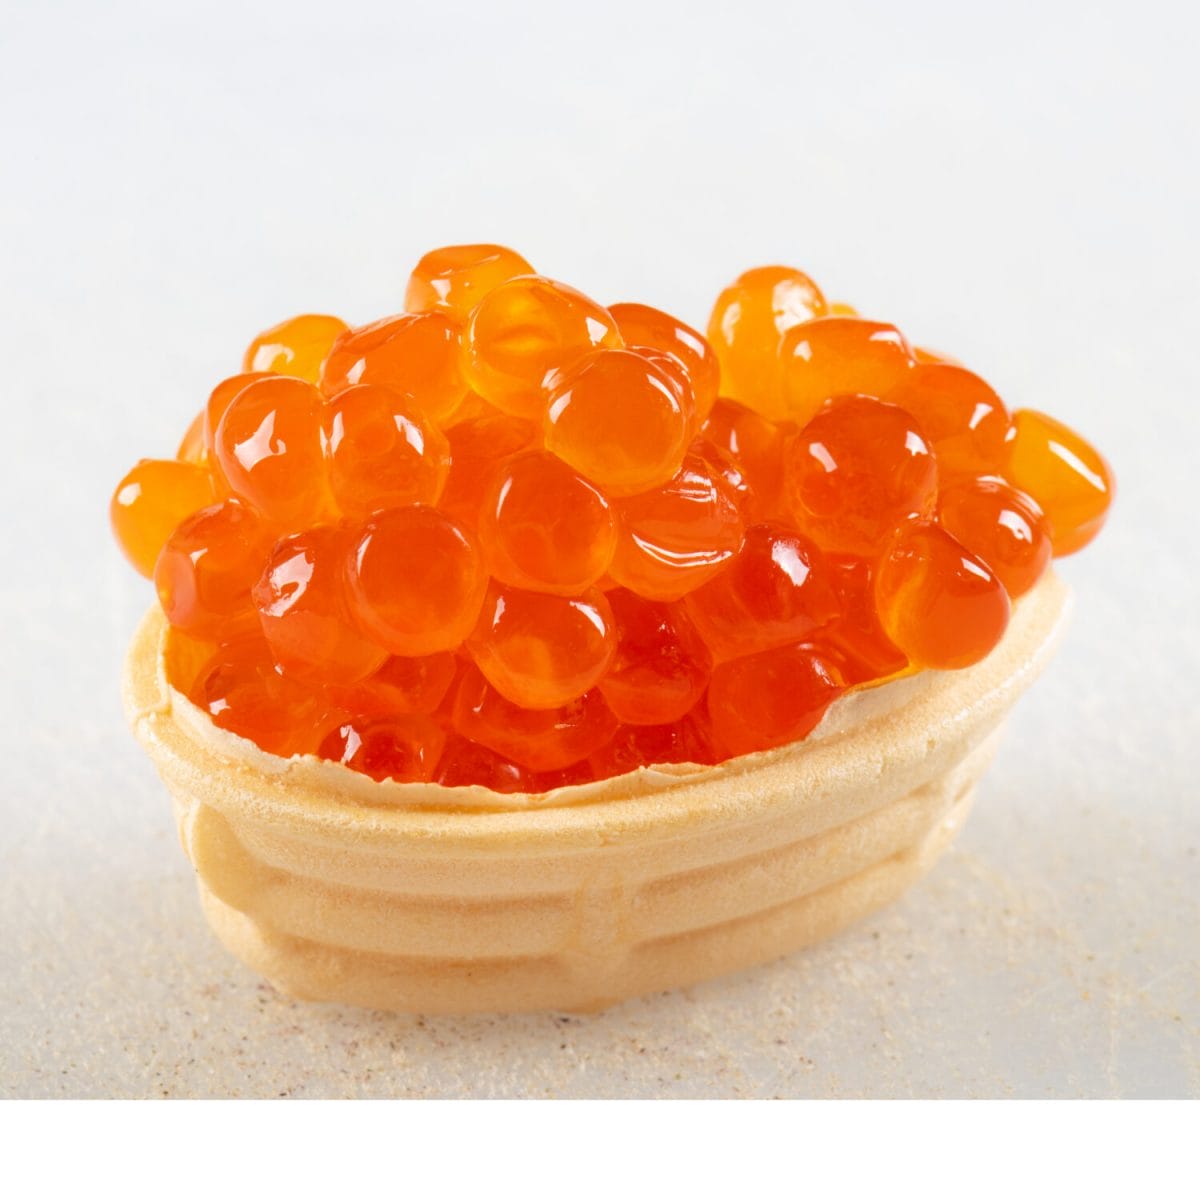 Caviar Lifestyle Food Photography Using CGI or AI tool in Toronto